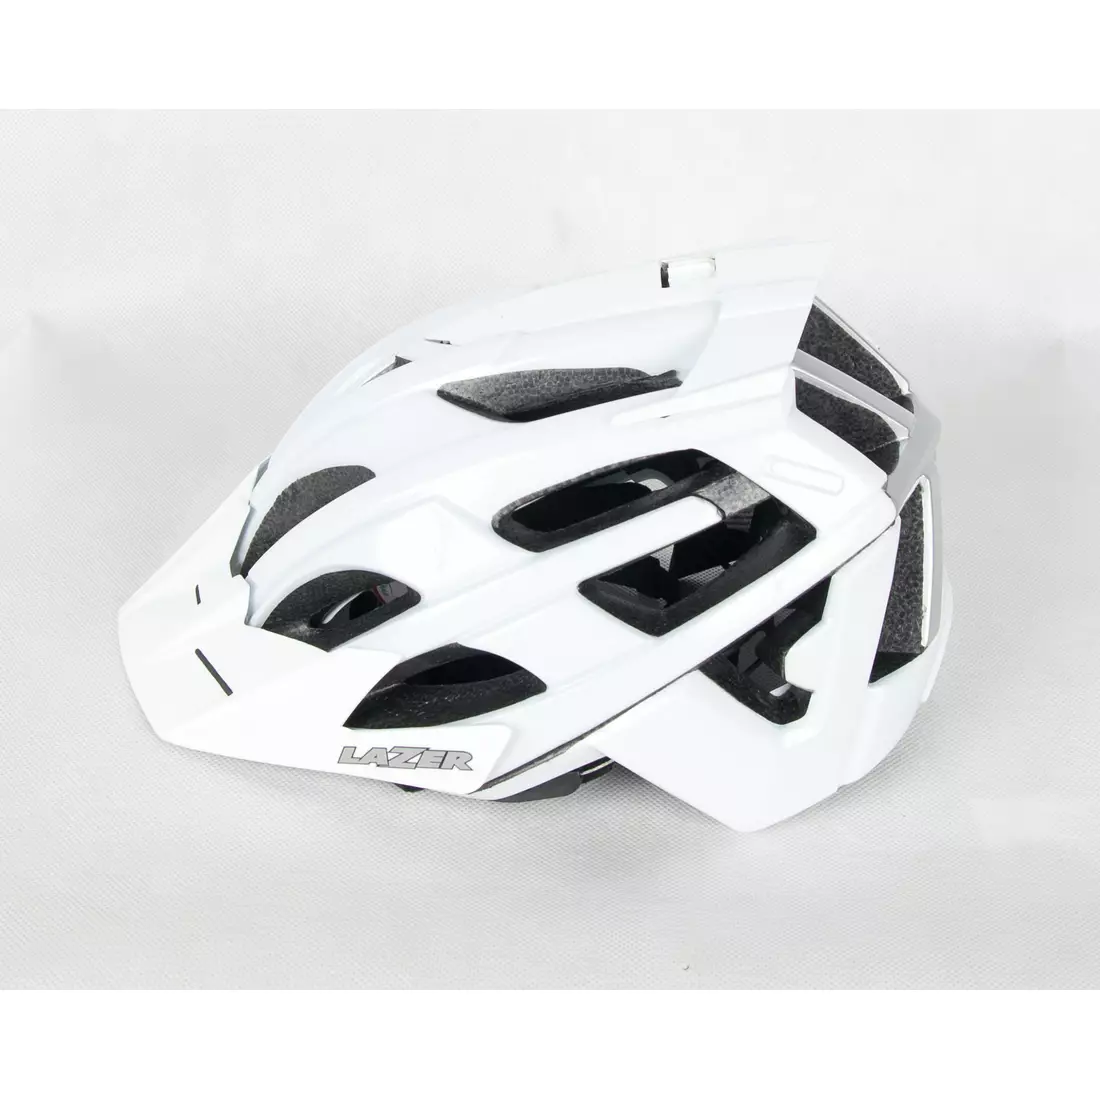 LAZER OASIZ MTB bicycle helmet, white